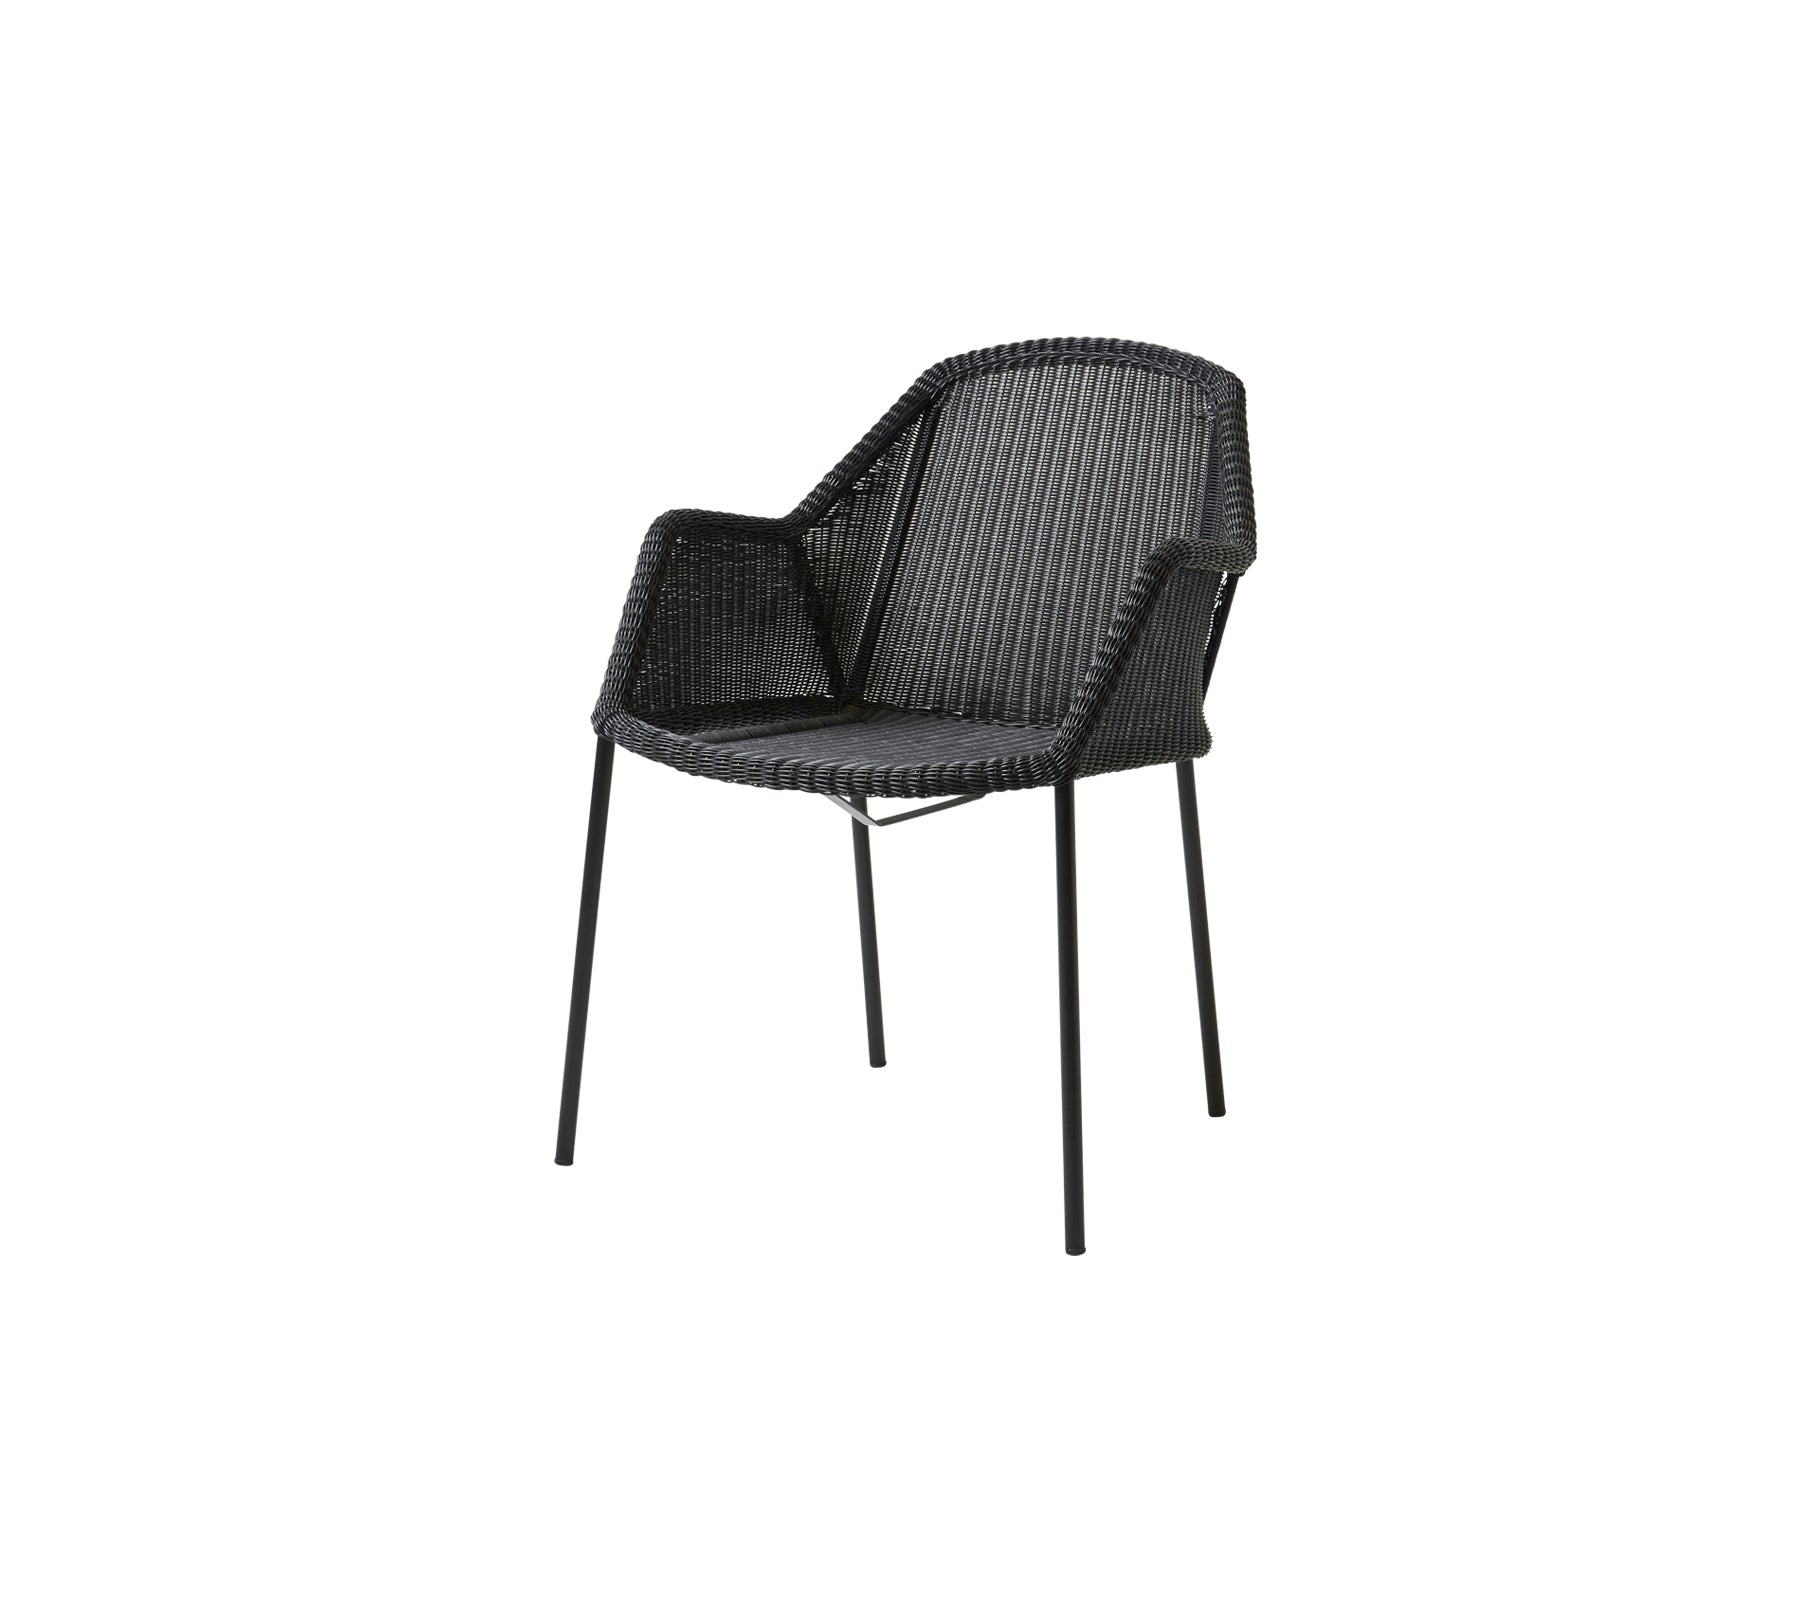 Cane-line Breeze Chair 5464LS